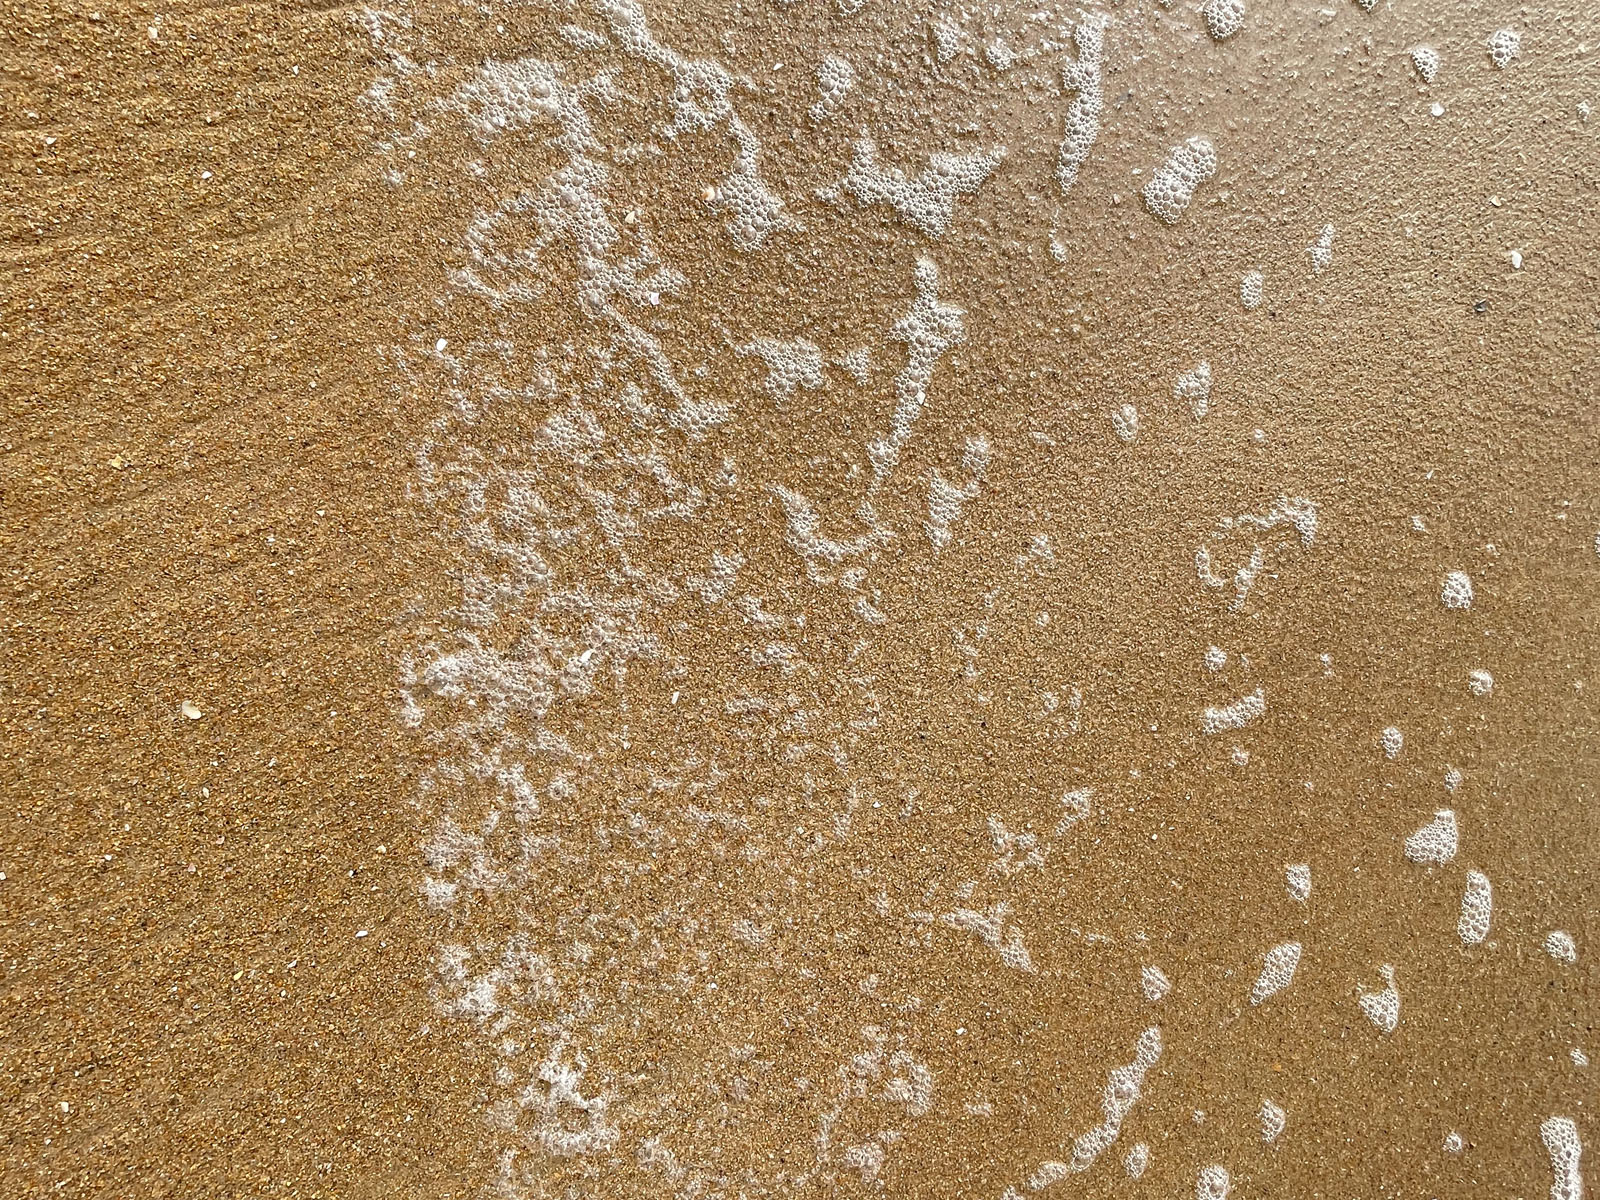 Seashore sand textures